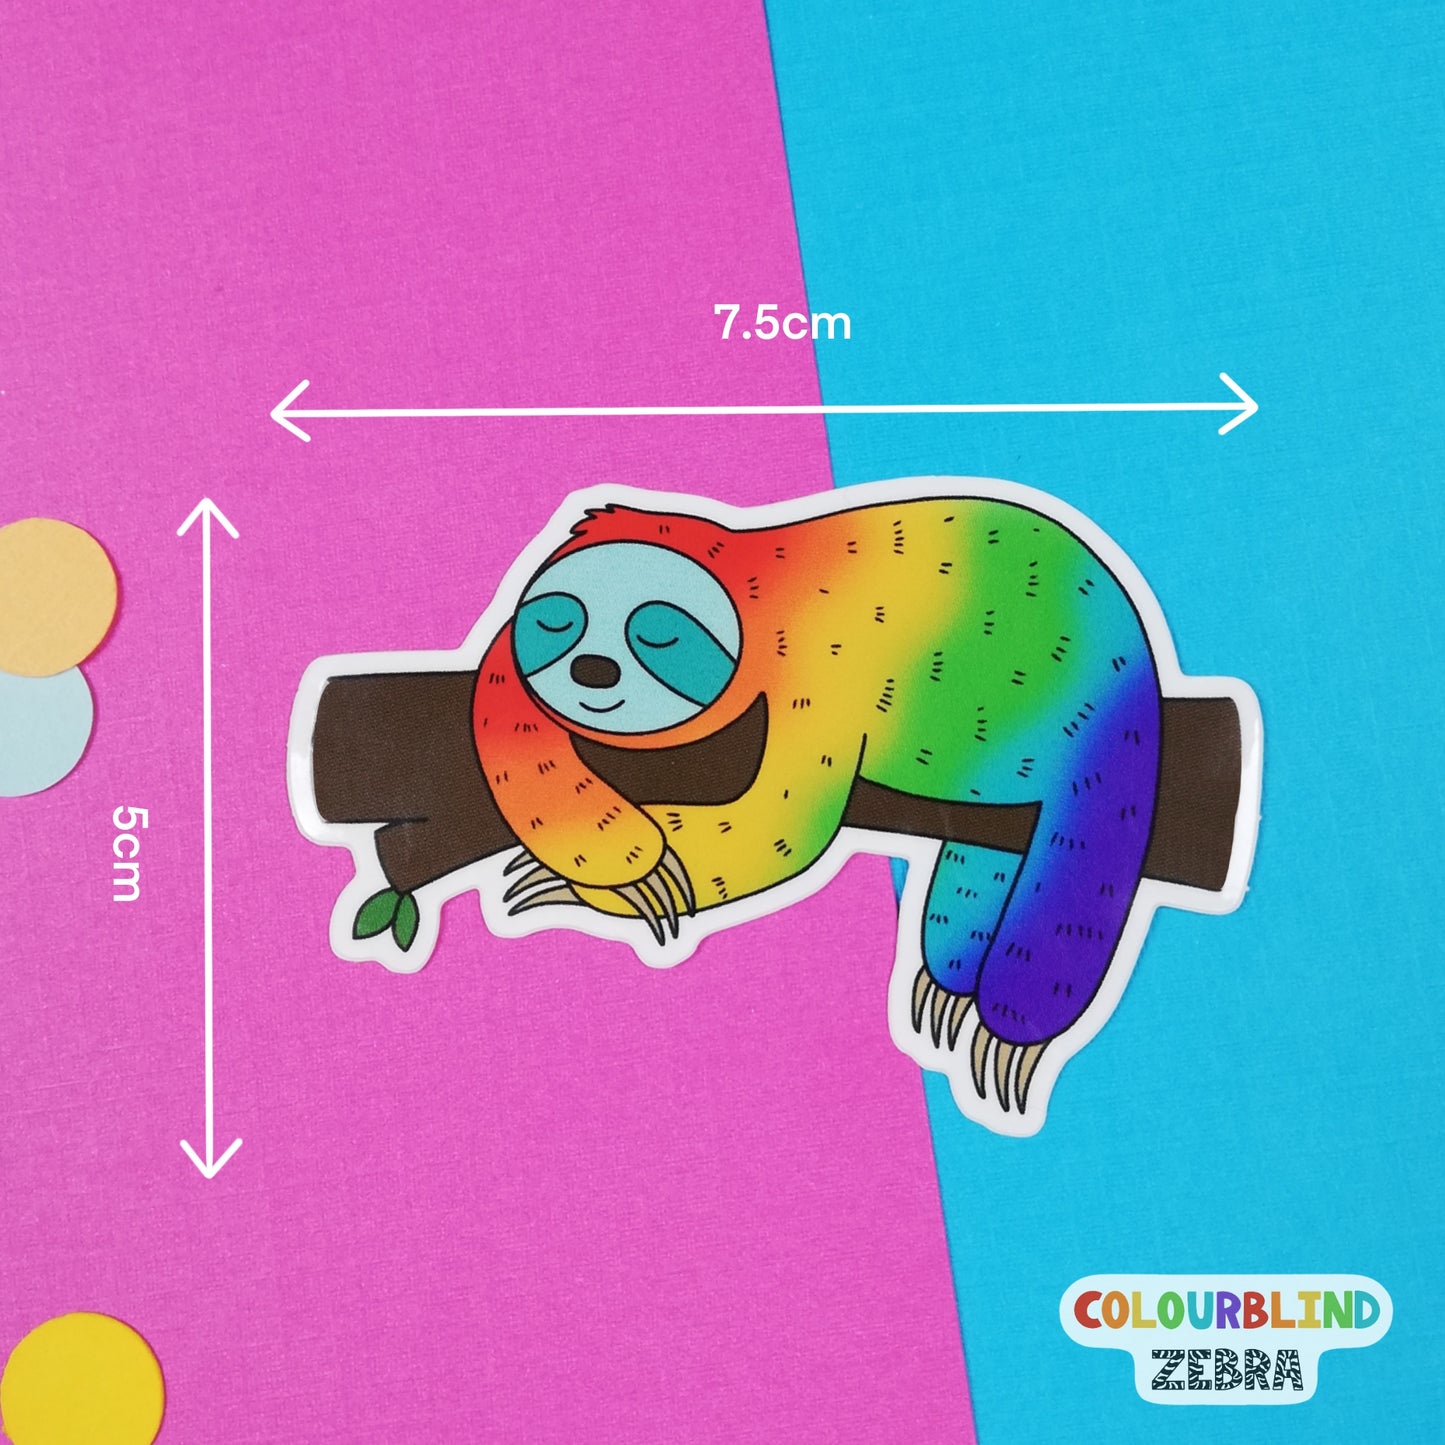 Rainbow Sloth Vinyl Sticker